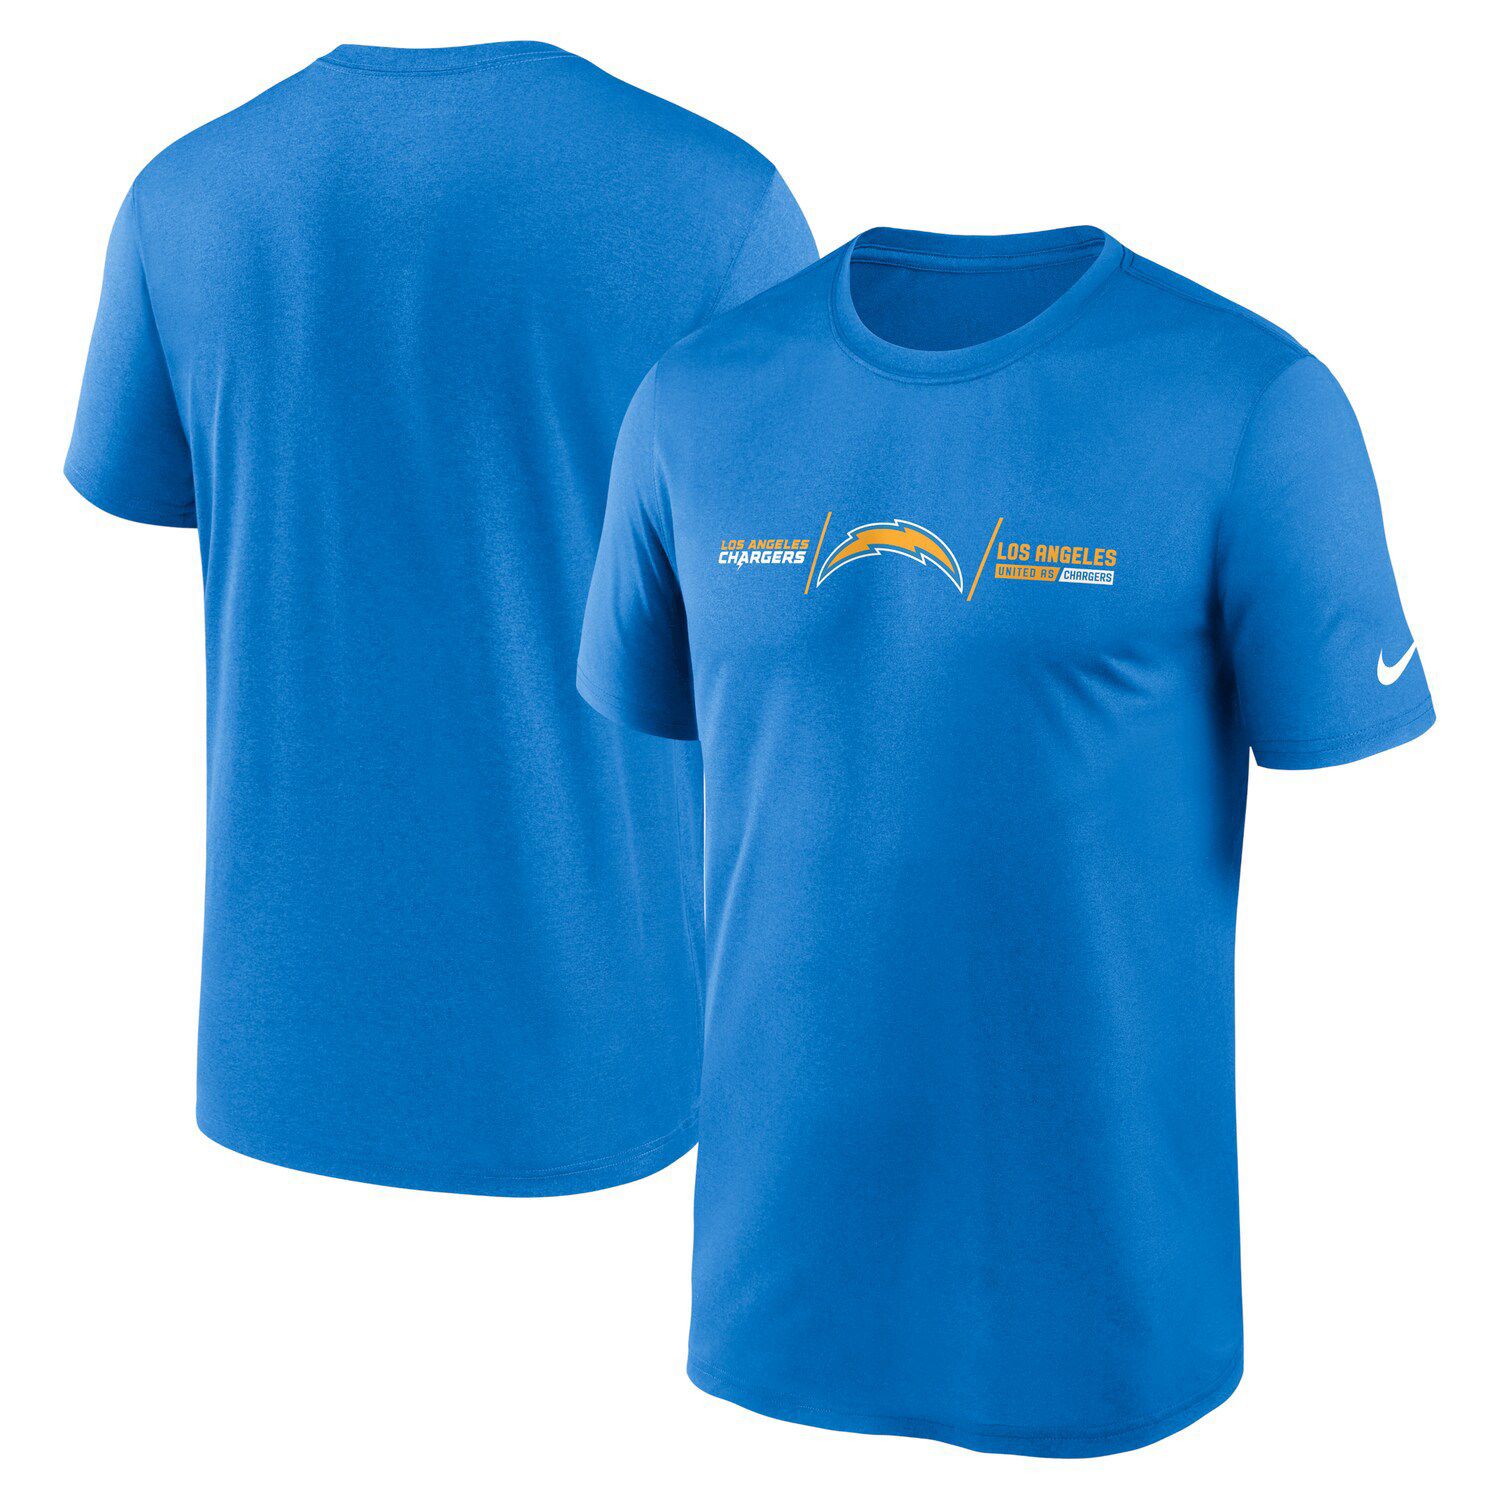 Men's Fanatics Branded Powder Blue Los Angeles Chargers Second Wind Raglan V-Neck T-Shirt